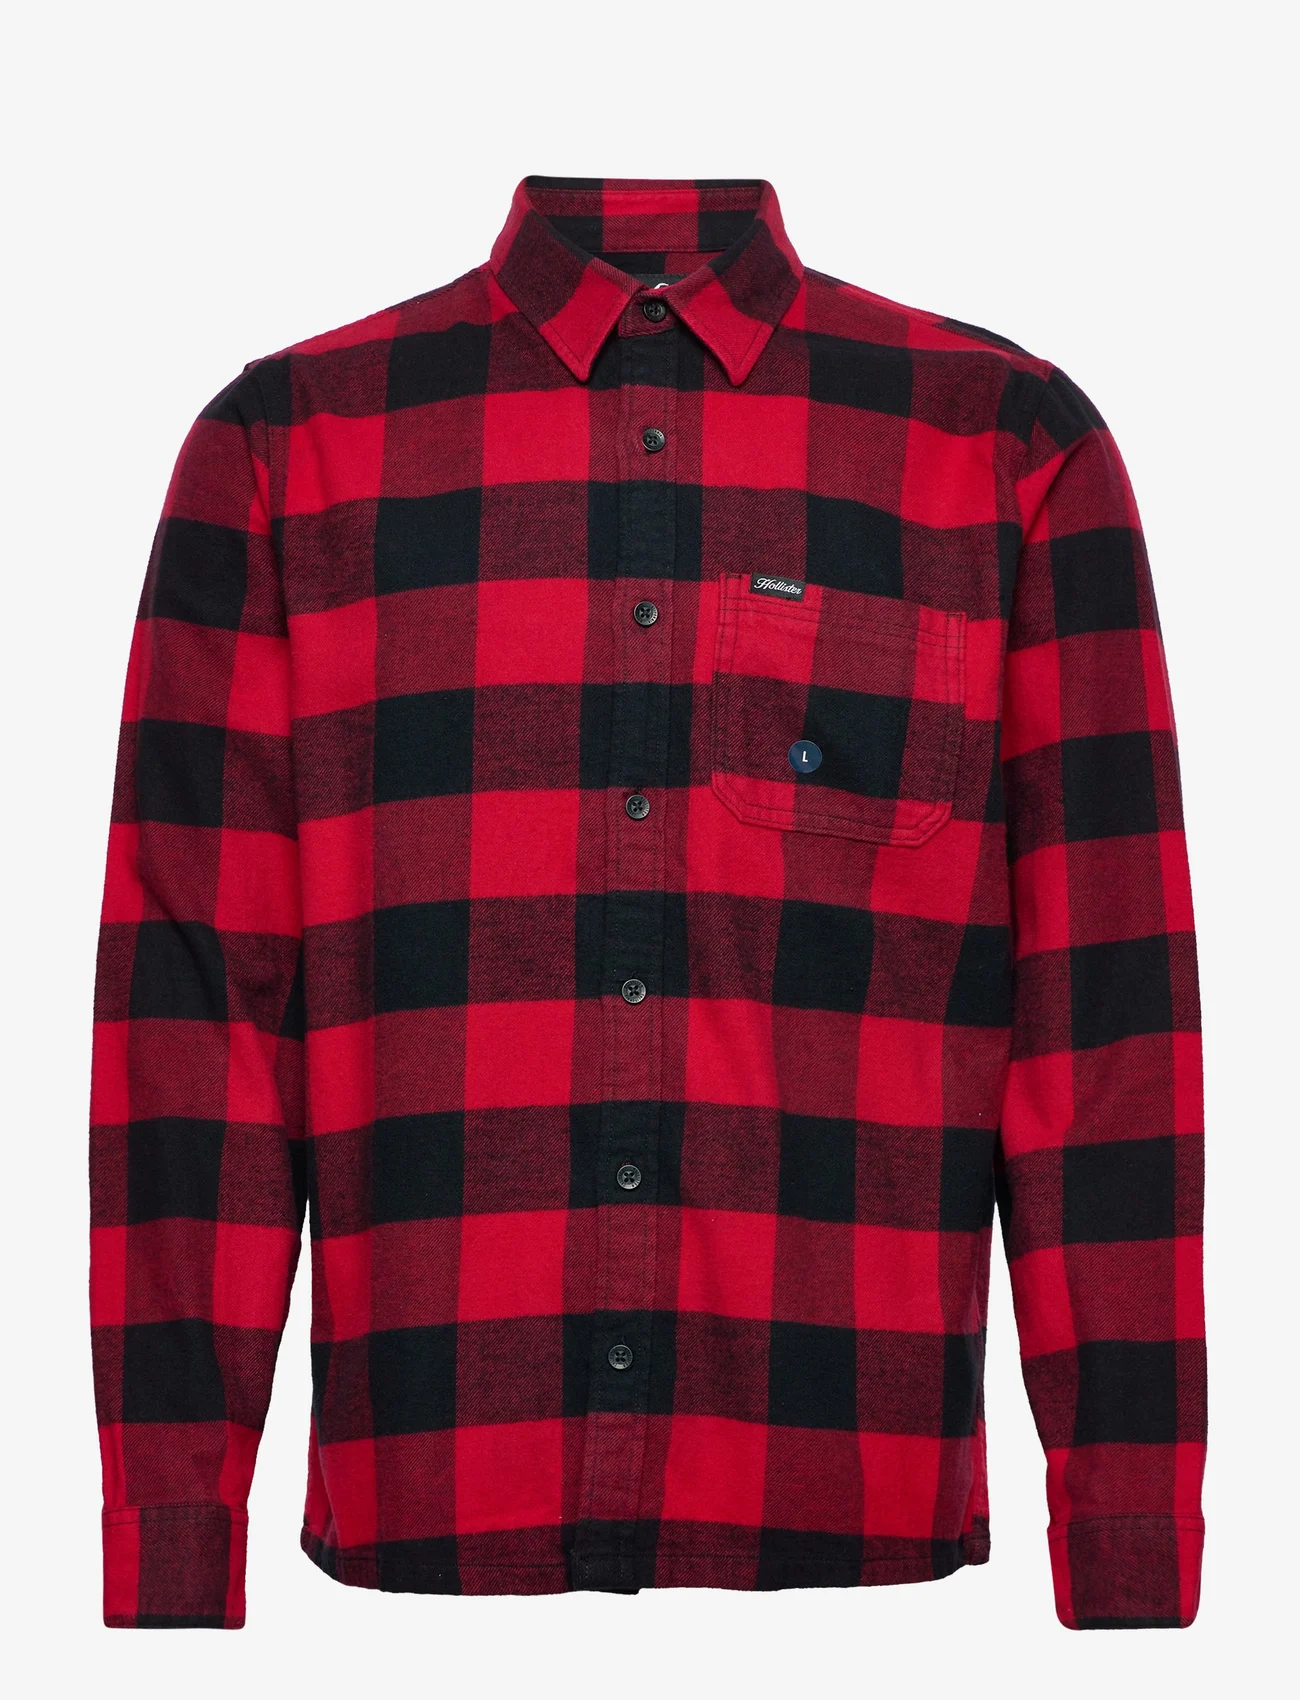 Hollister - HCo. GUYS WOVENS - koszule w kratkę - red/ black buffalo - 0